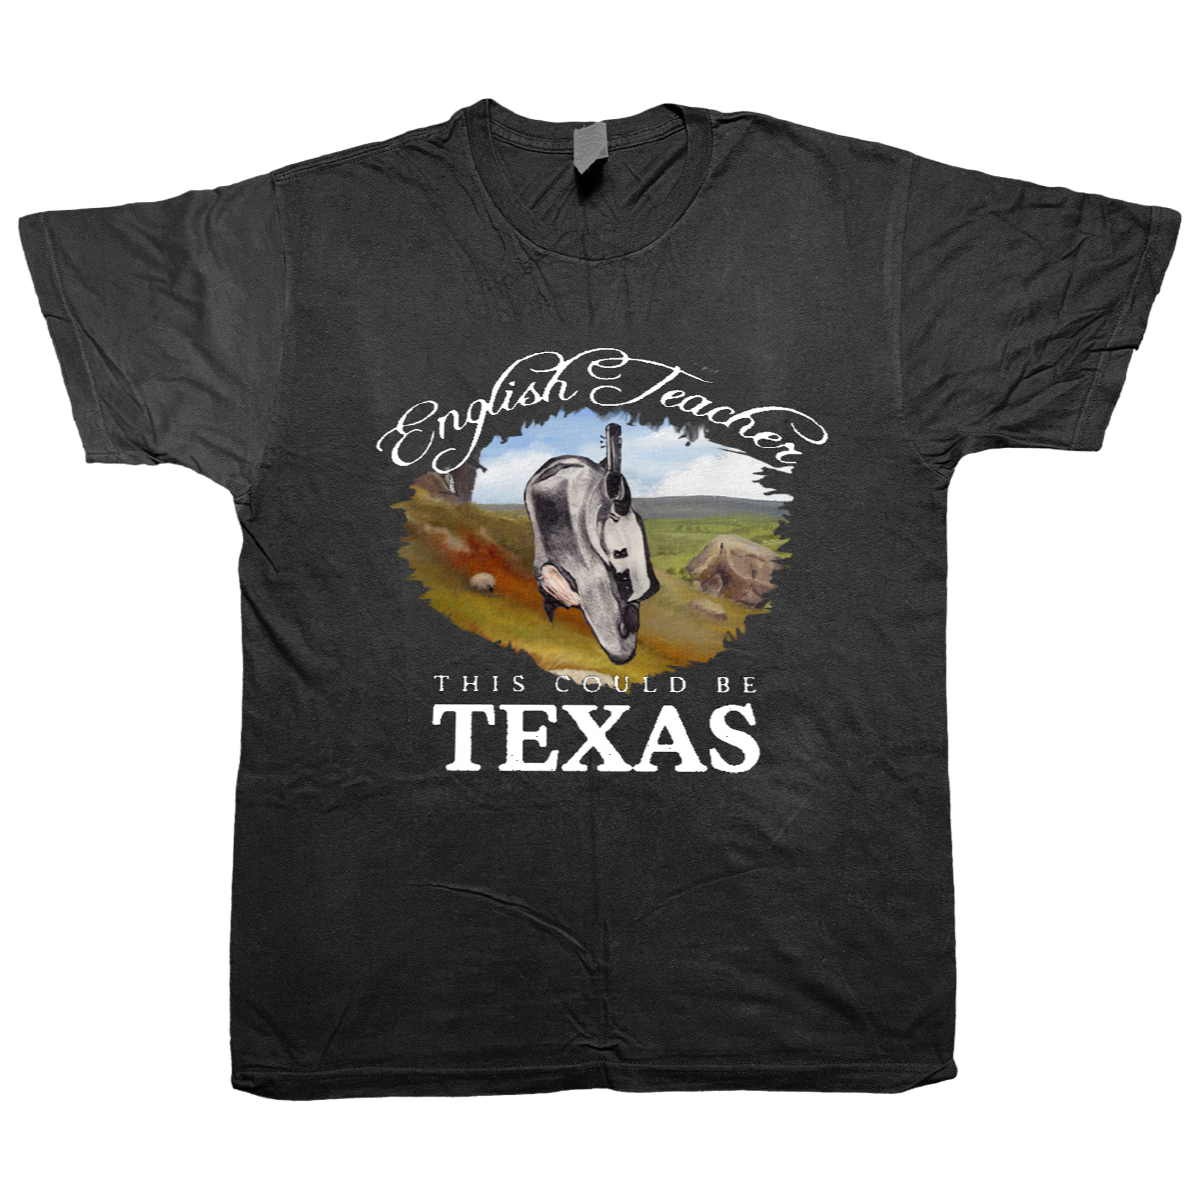 English Teacher - This Could Be Texas: Black T-shirt